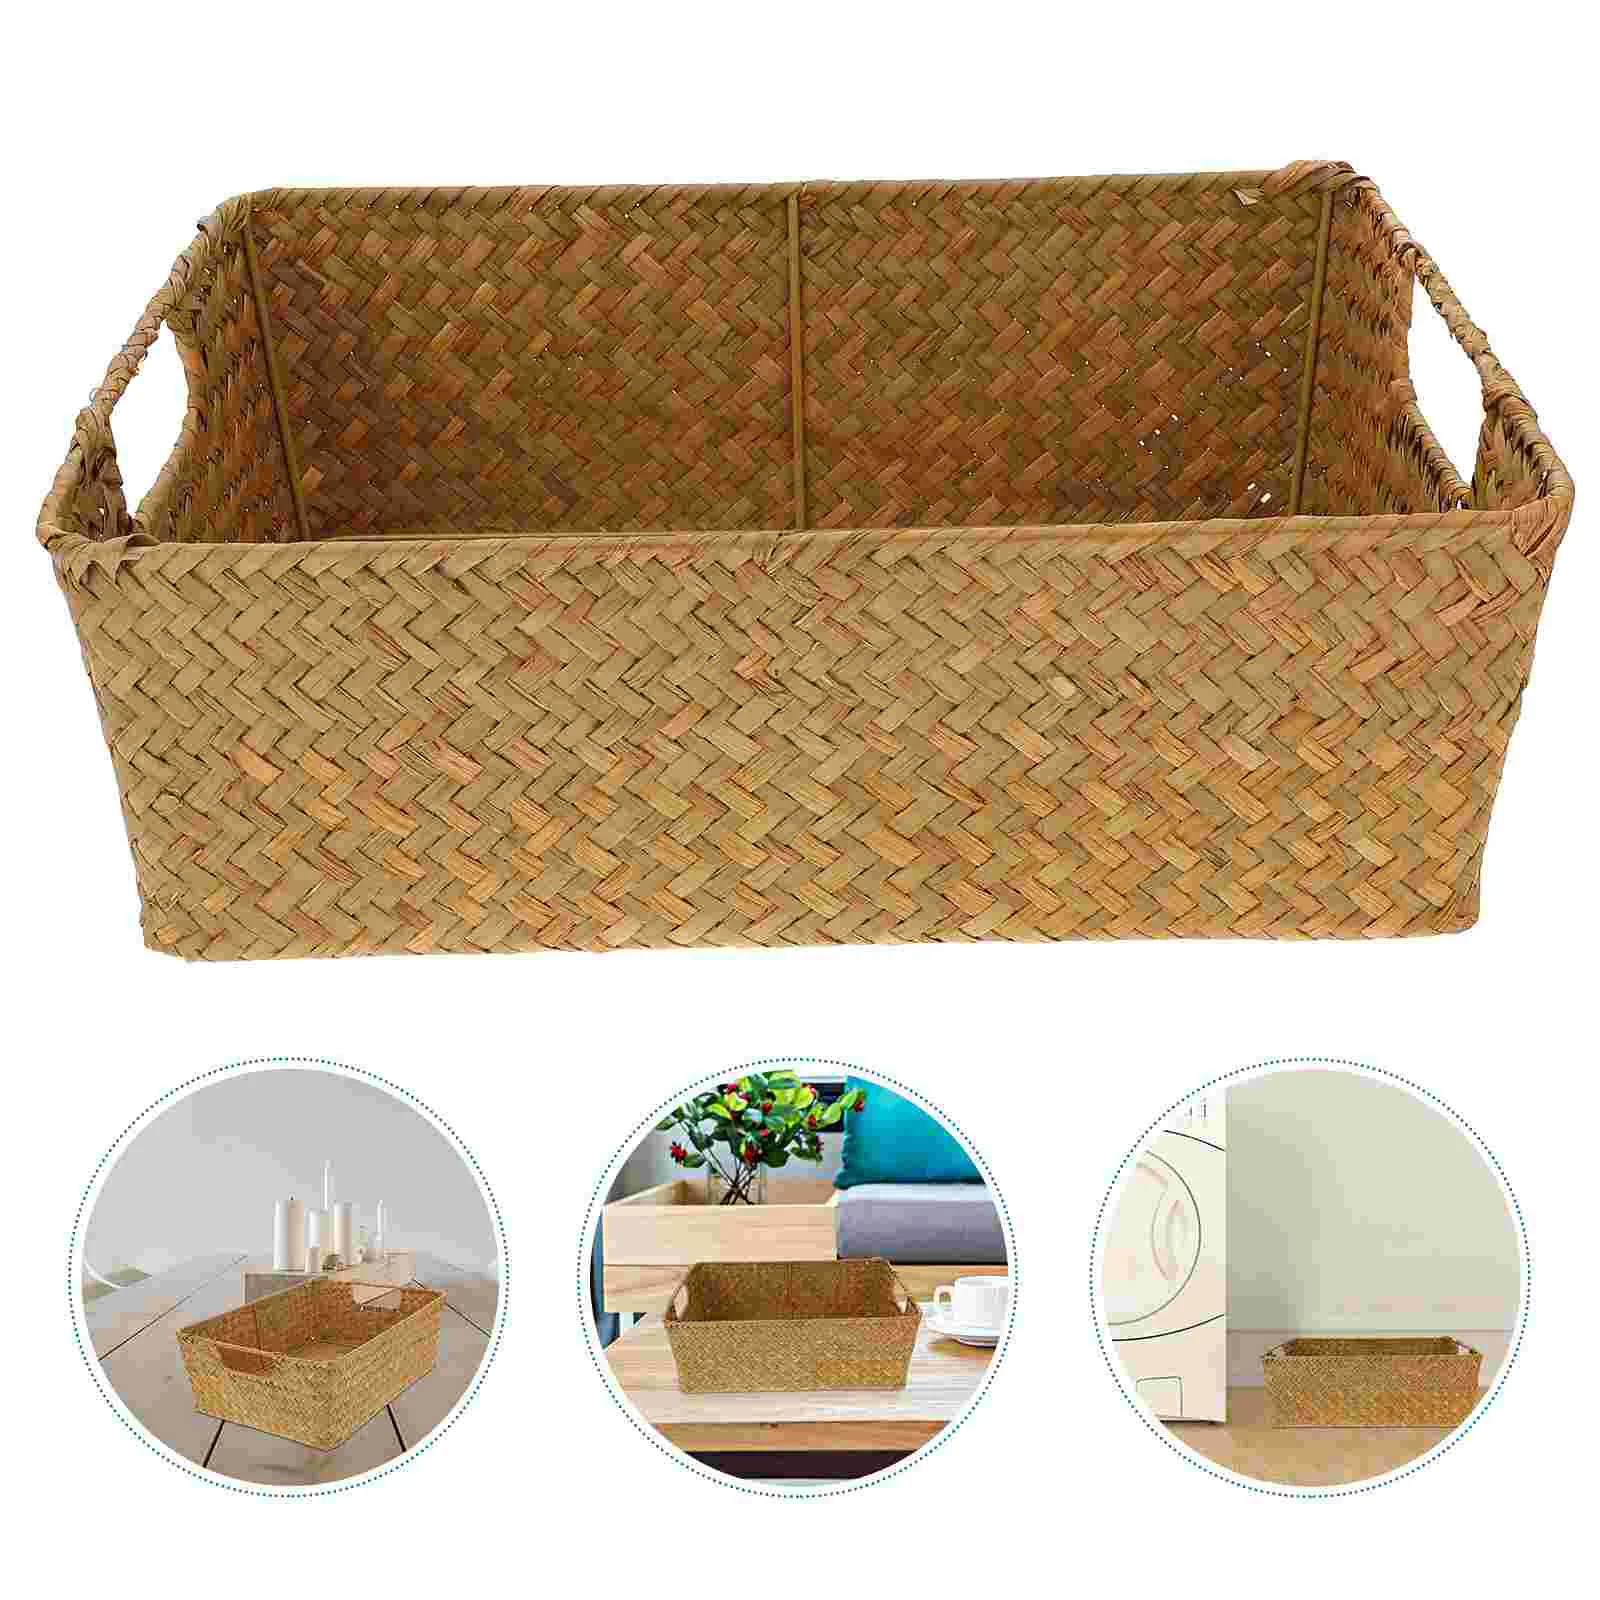 

Basket Storage Woven Baskets Wicker Seagrass Rattan Bins Organizer Serving Box Fruit Seaweed Rectangular Tray Laundry Bin Shelf